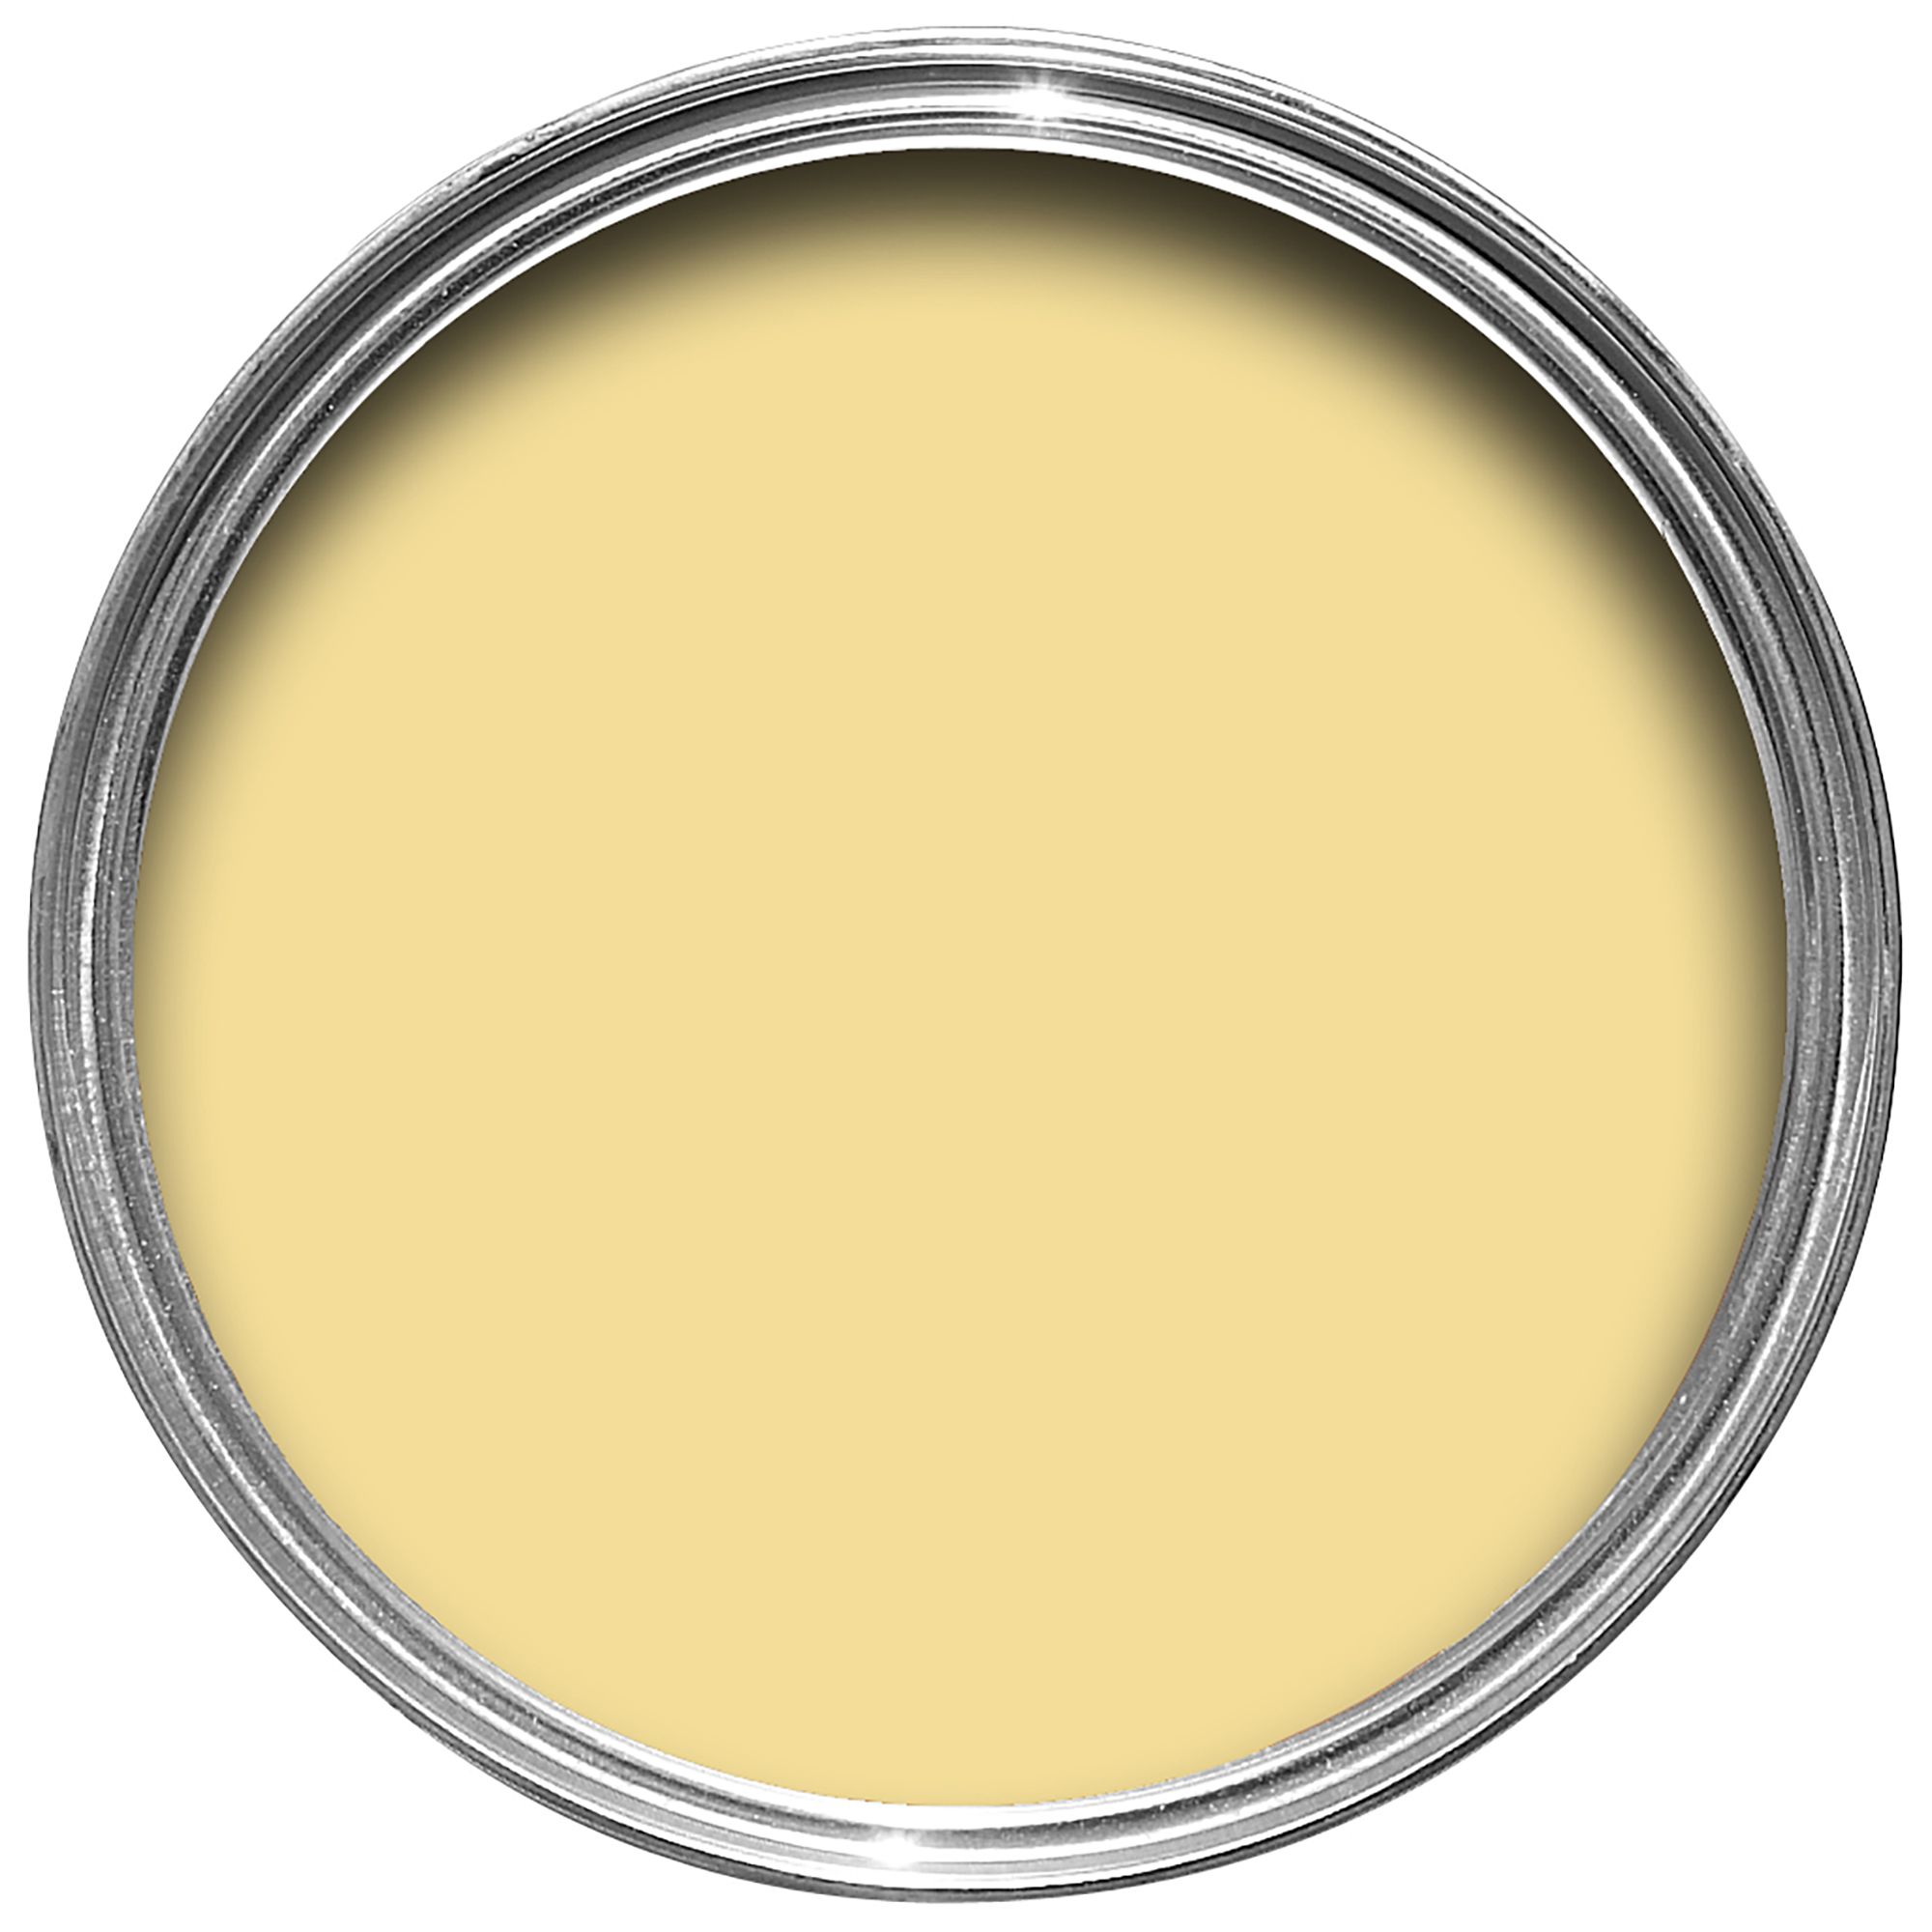 Farrow & Ball Modern Dayroom Yellow No.233 Eggshell Paint, 750ml